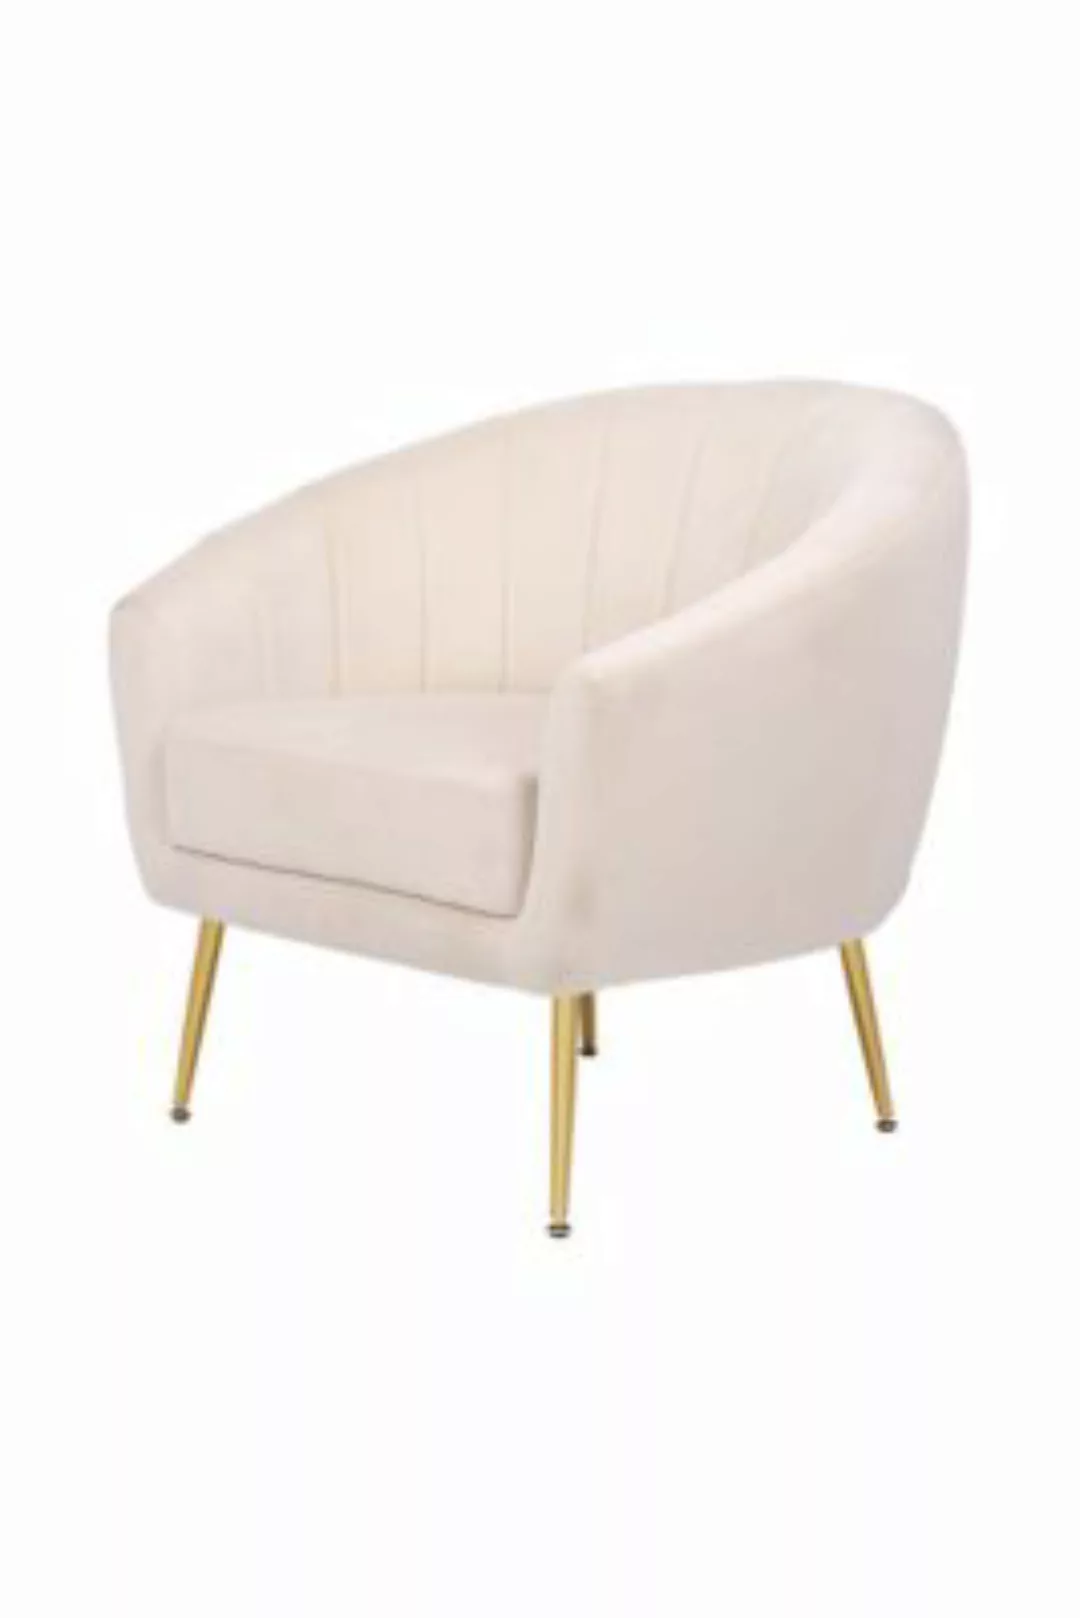 Kayoom Sessel Sessel / Sofa Doreen 125 Creme creme günstig online kaufen